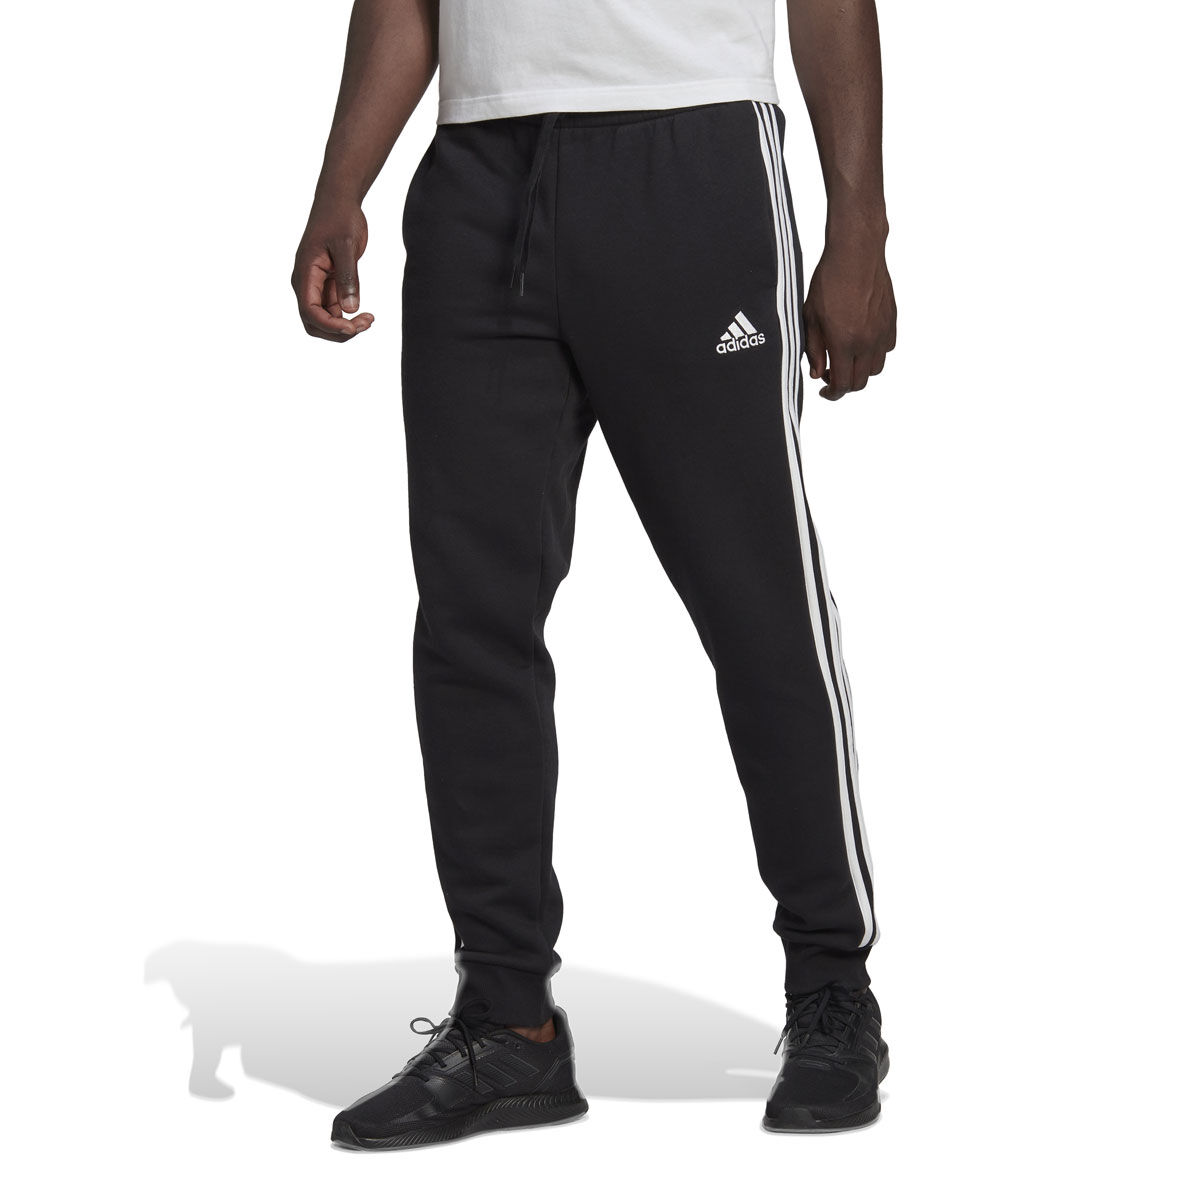 KIDS FASHION Trousers Sports Black/Pink 11Y discount 89% Adidas slacks 